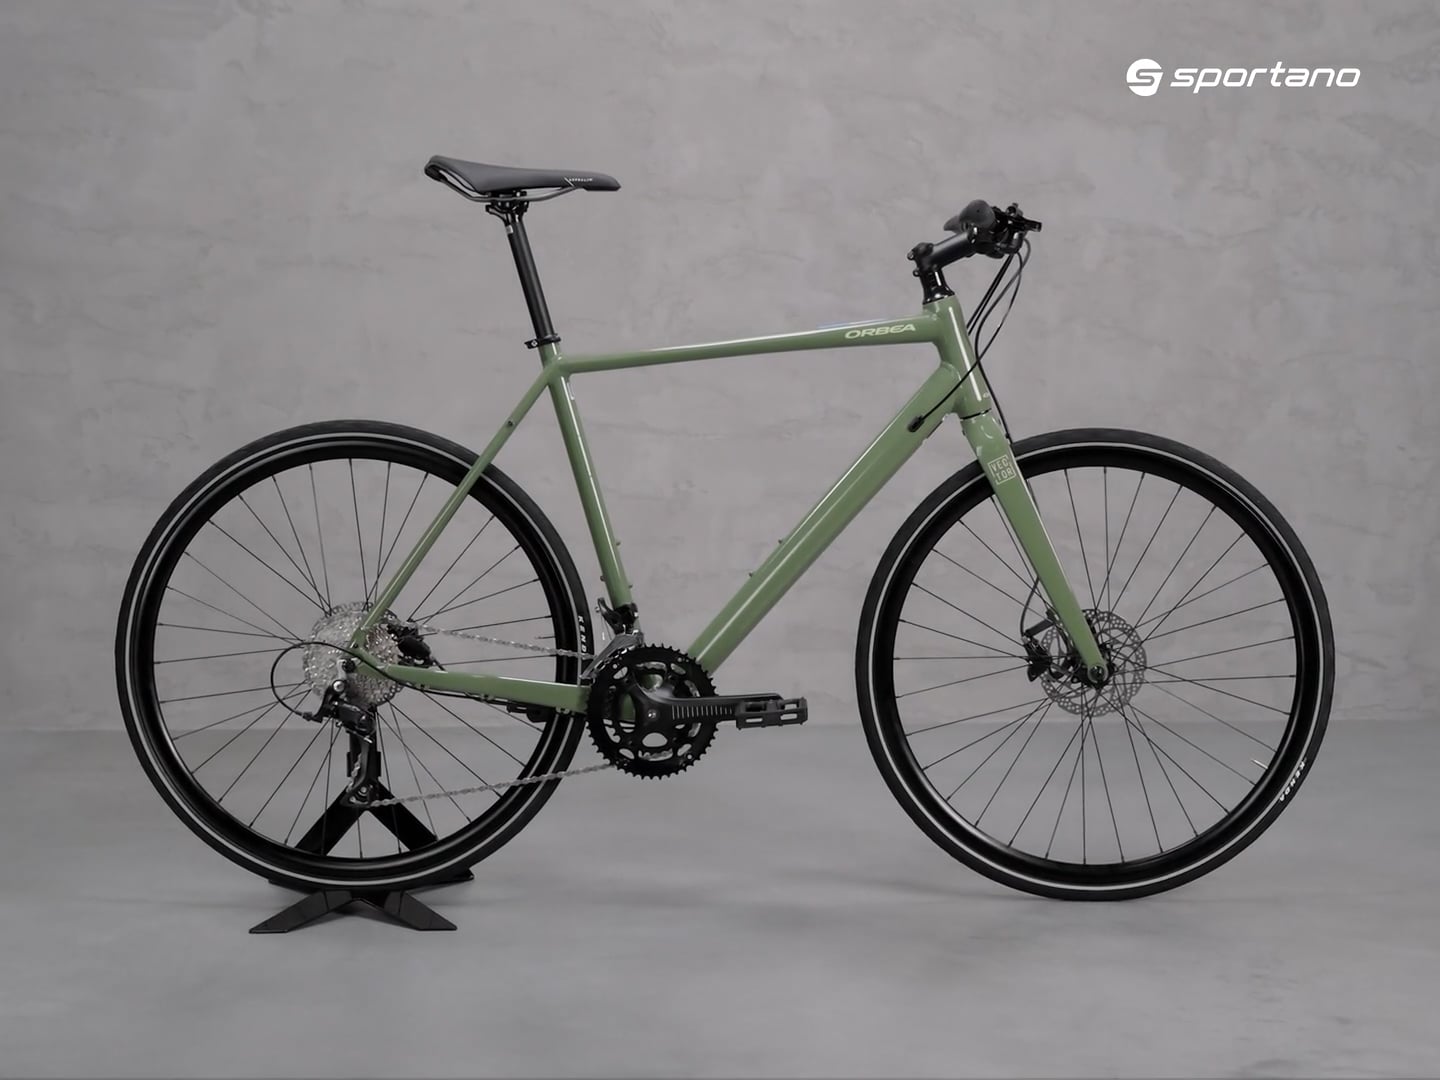 Férfi fitness kerékpár Orbea Vector 20 zöld M40656RK